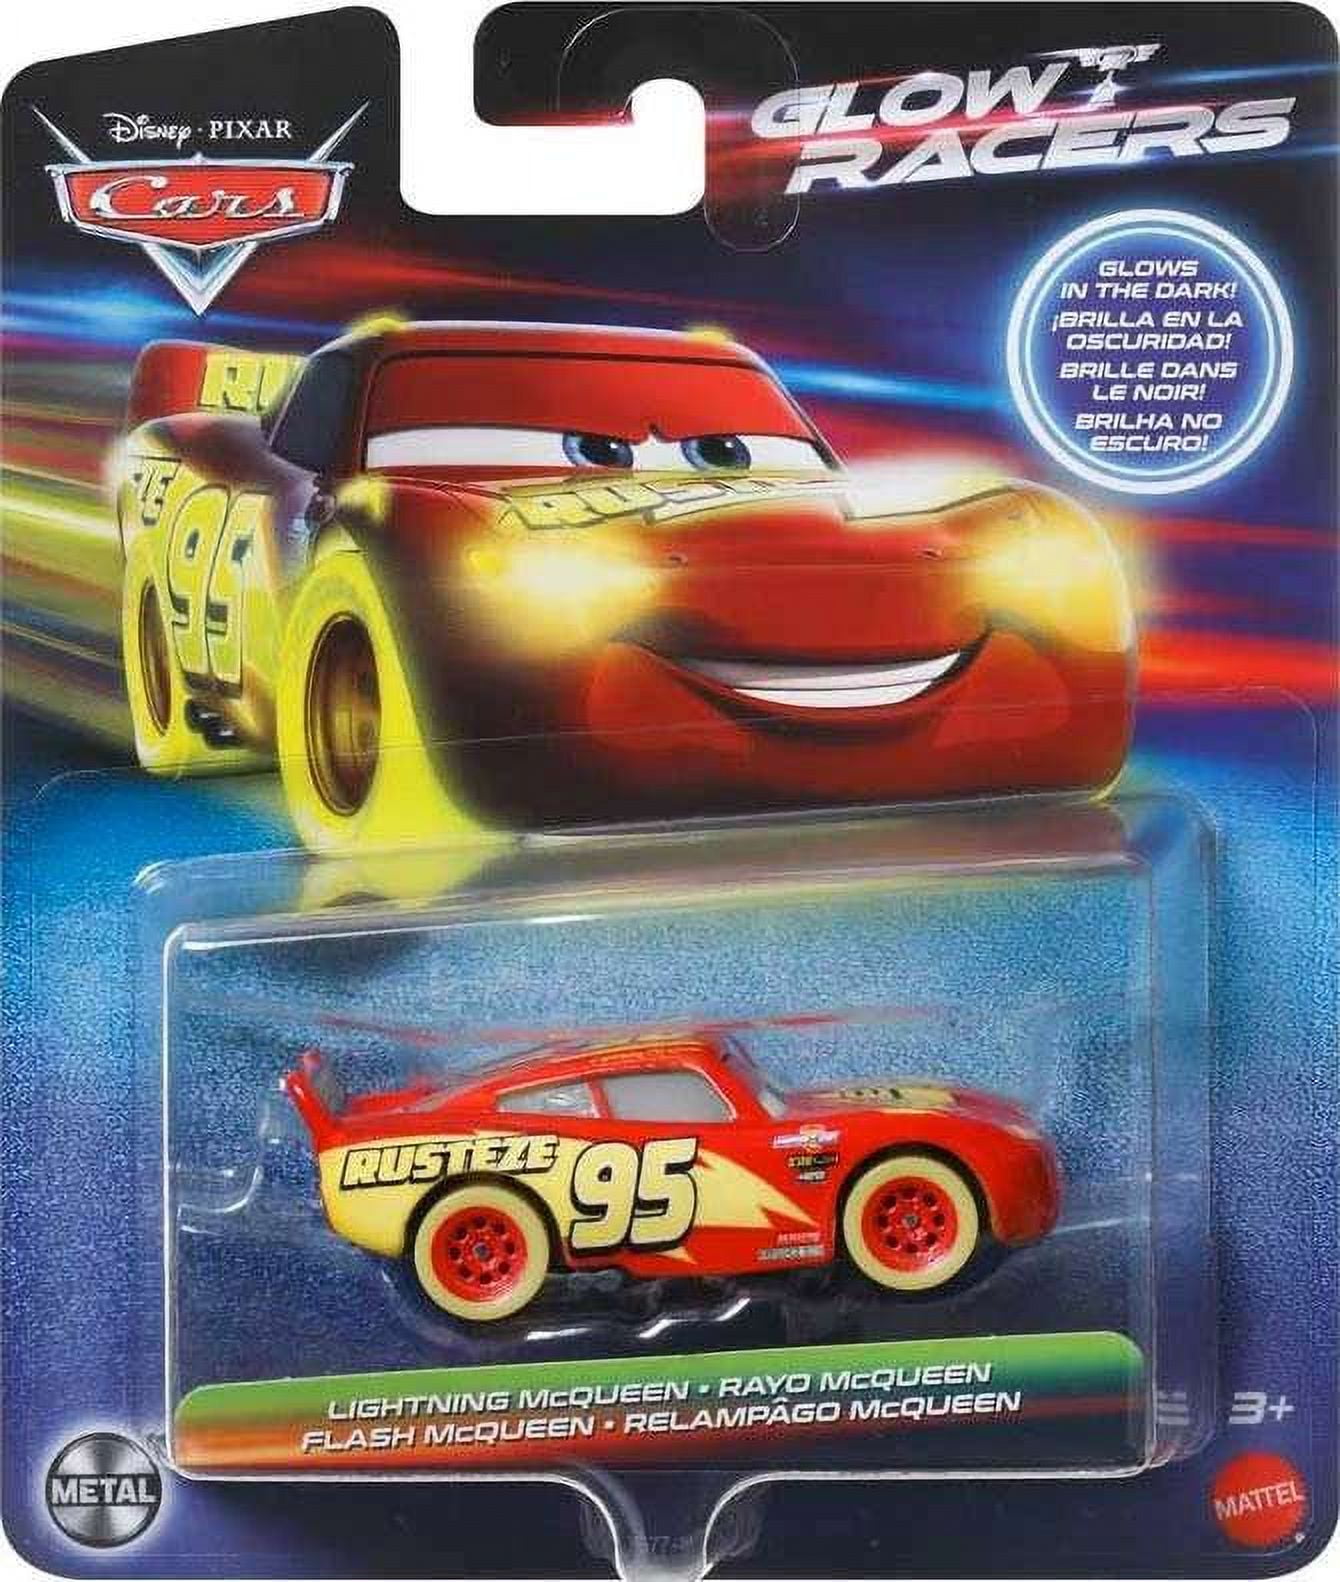 Mattel Disney Cars Dinoco Lightning McQueen (& Comparison of All Dinoco  Racers) Die-cast 